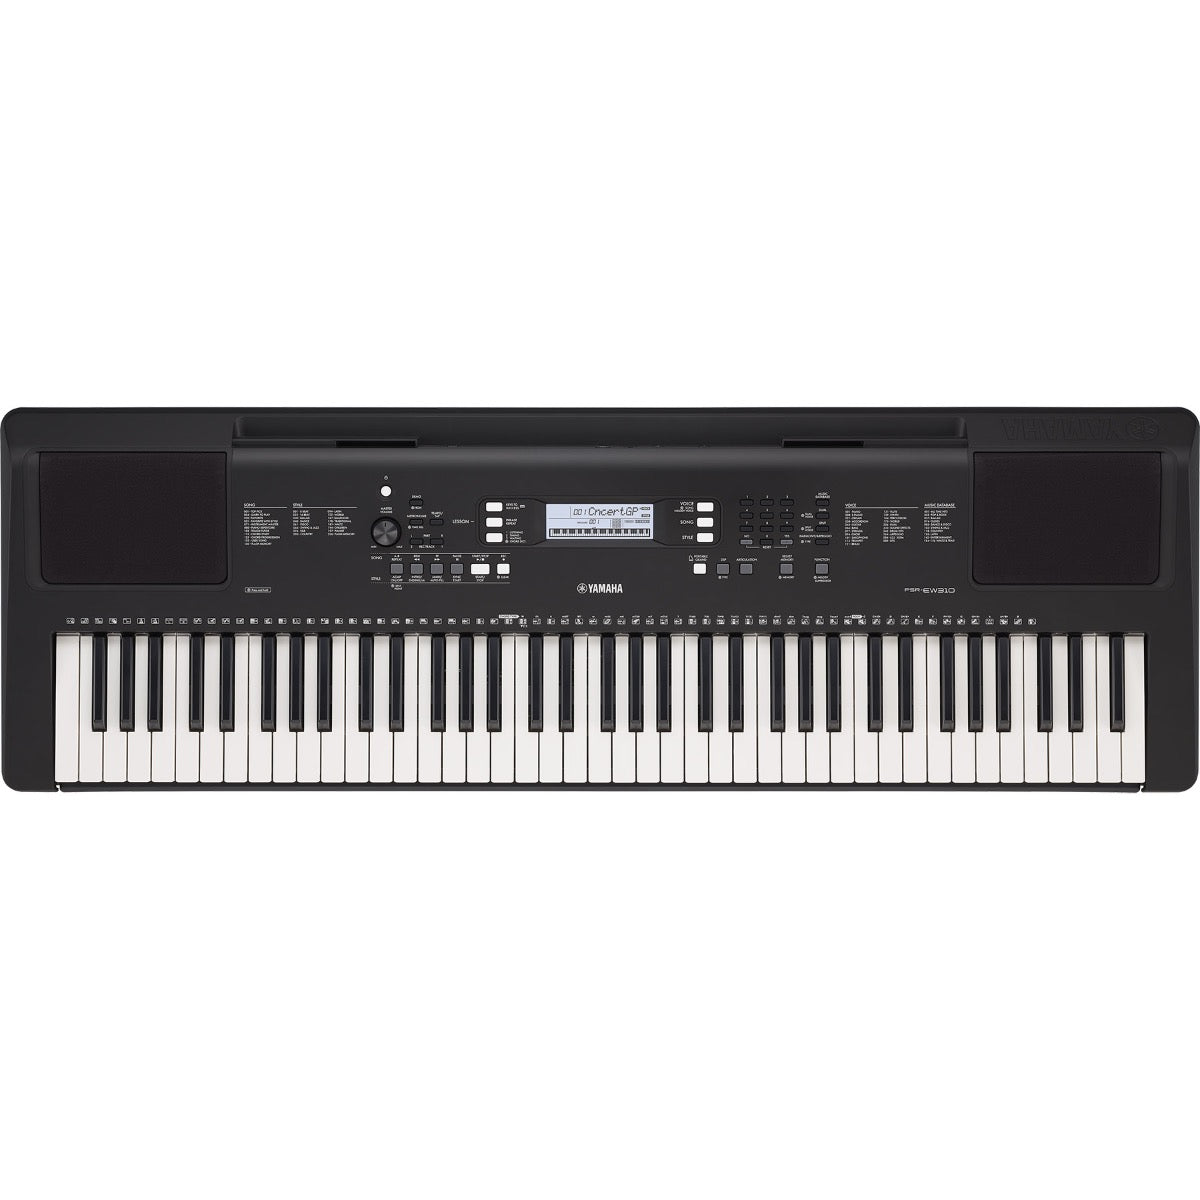 Top view of Yamaha PSR-EW310 Portable Keyboard